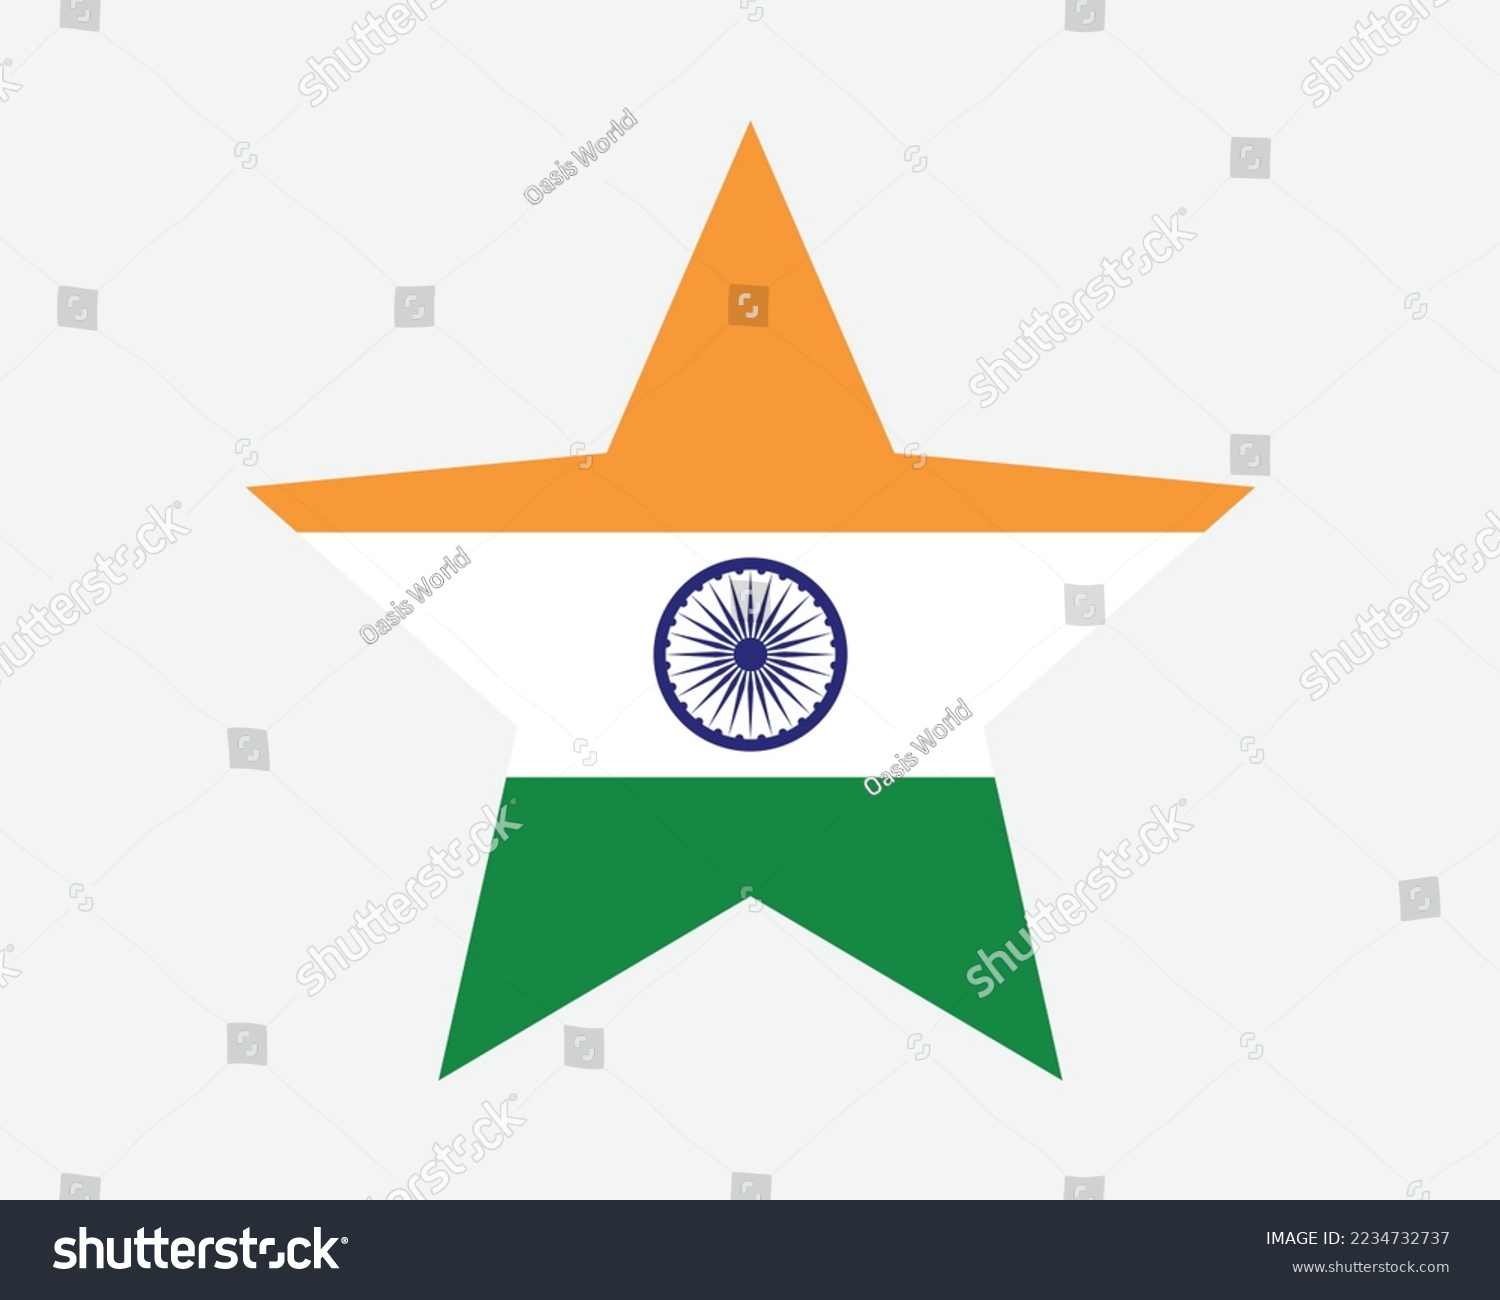 SVG of India Star Flag. Indian Star Shape Flag. Country National Banner Icon Symbol Vector Flat Artwork Graphic Illustration svg